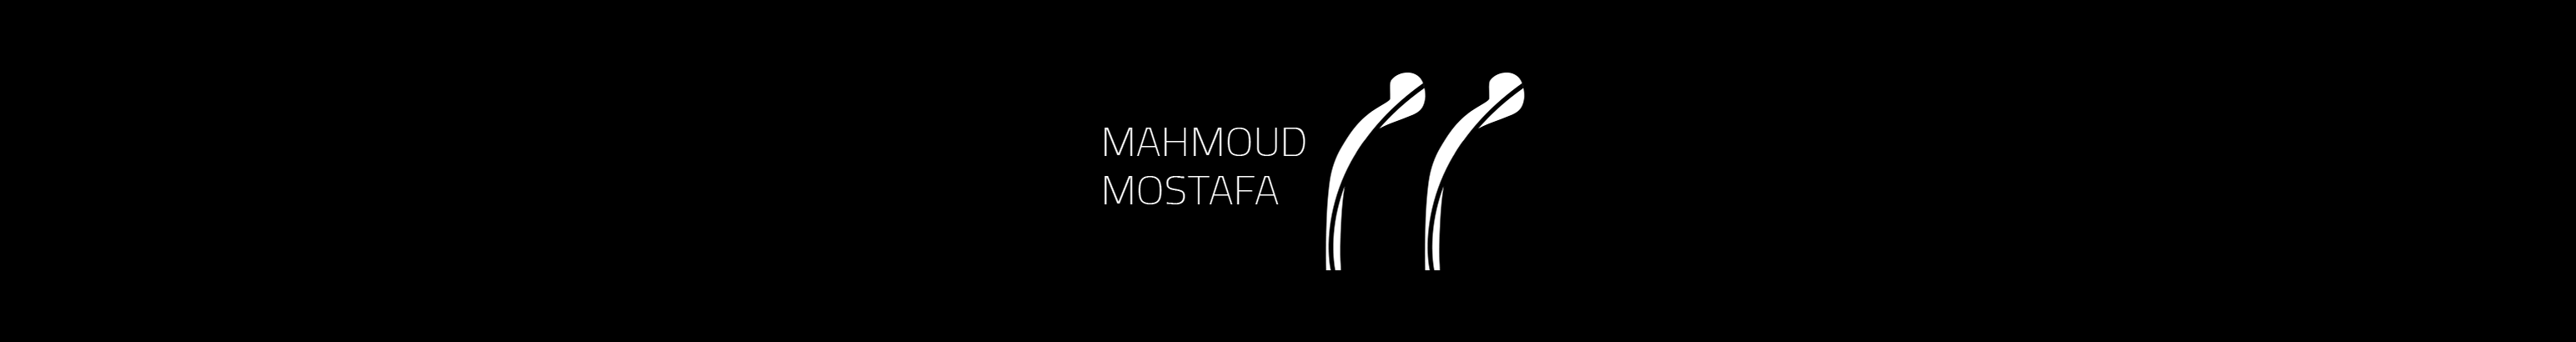 mahmoud mostafa 的个人资料横幅